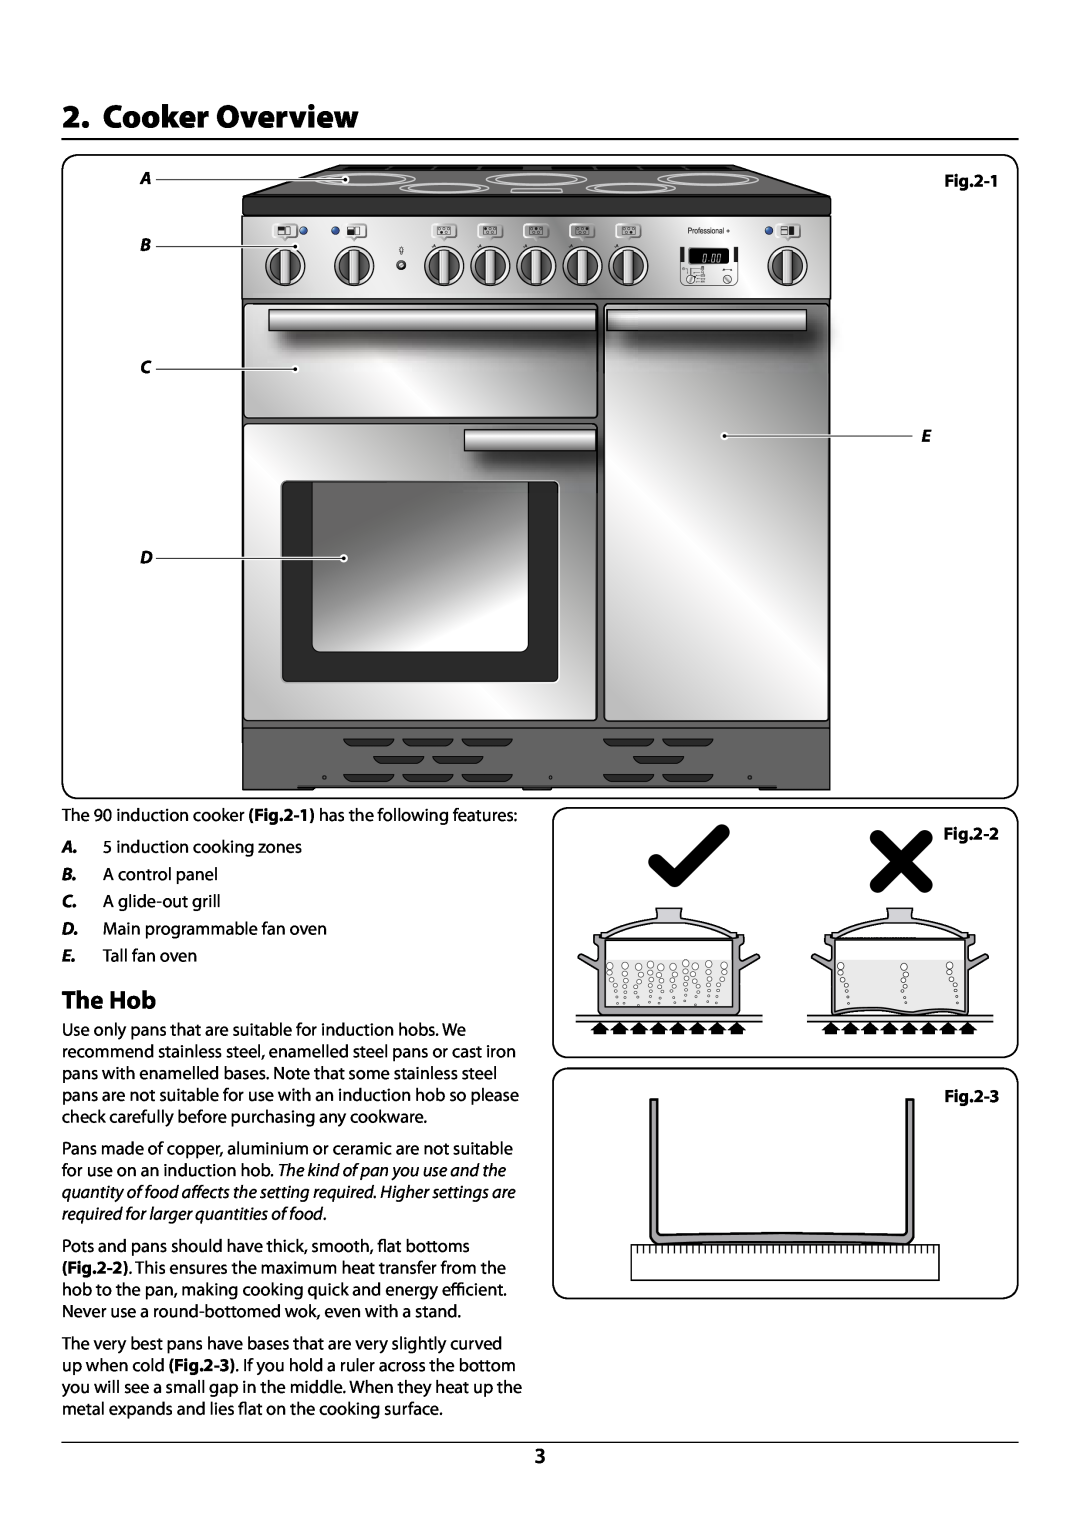 Rangemaster U109941 - 02 manual The Hob, Cooker Overview, 3 